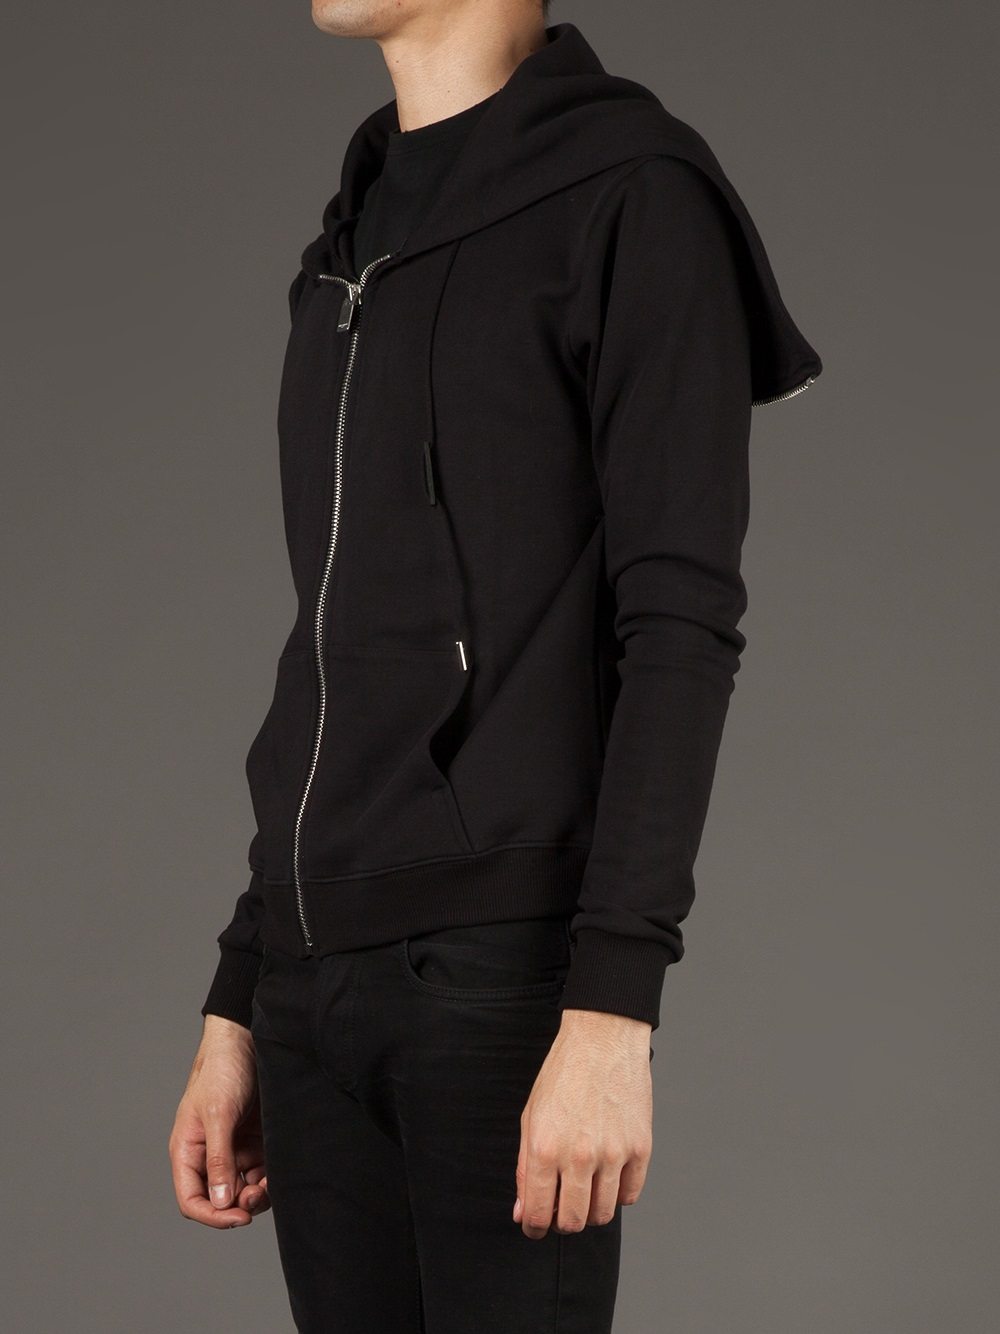 Saint Laurent Zip Detail Hoodie in Black for Men - Lyst